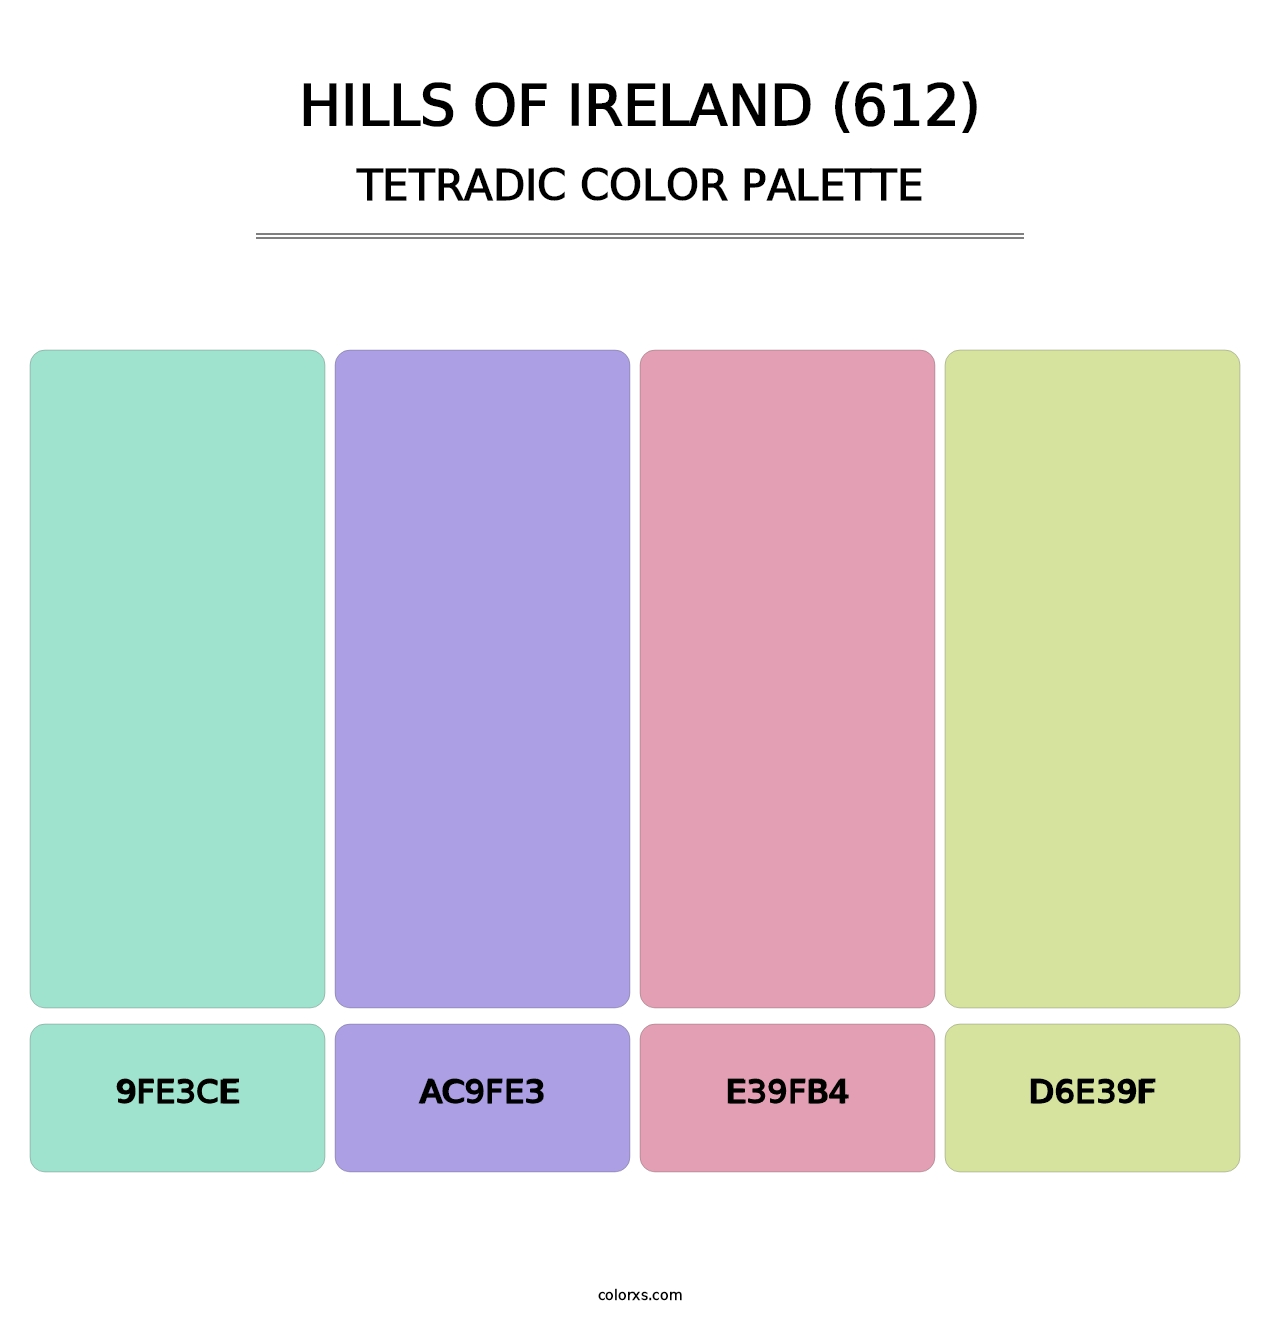 Hills of Ireland (612) - Tetradic Color Palette